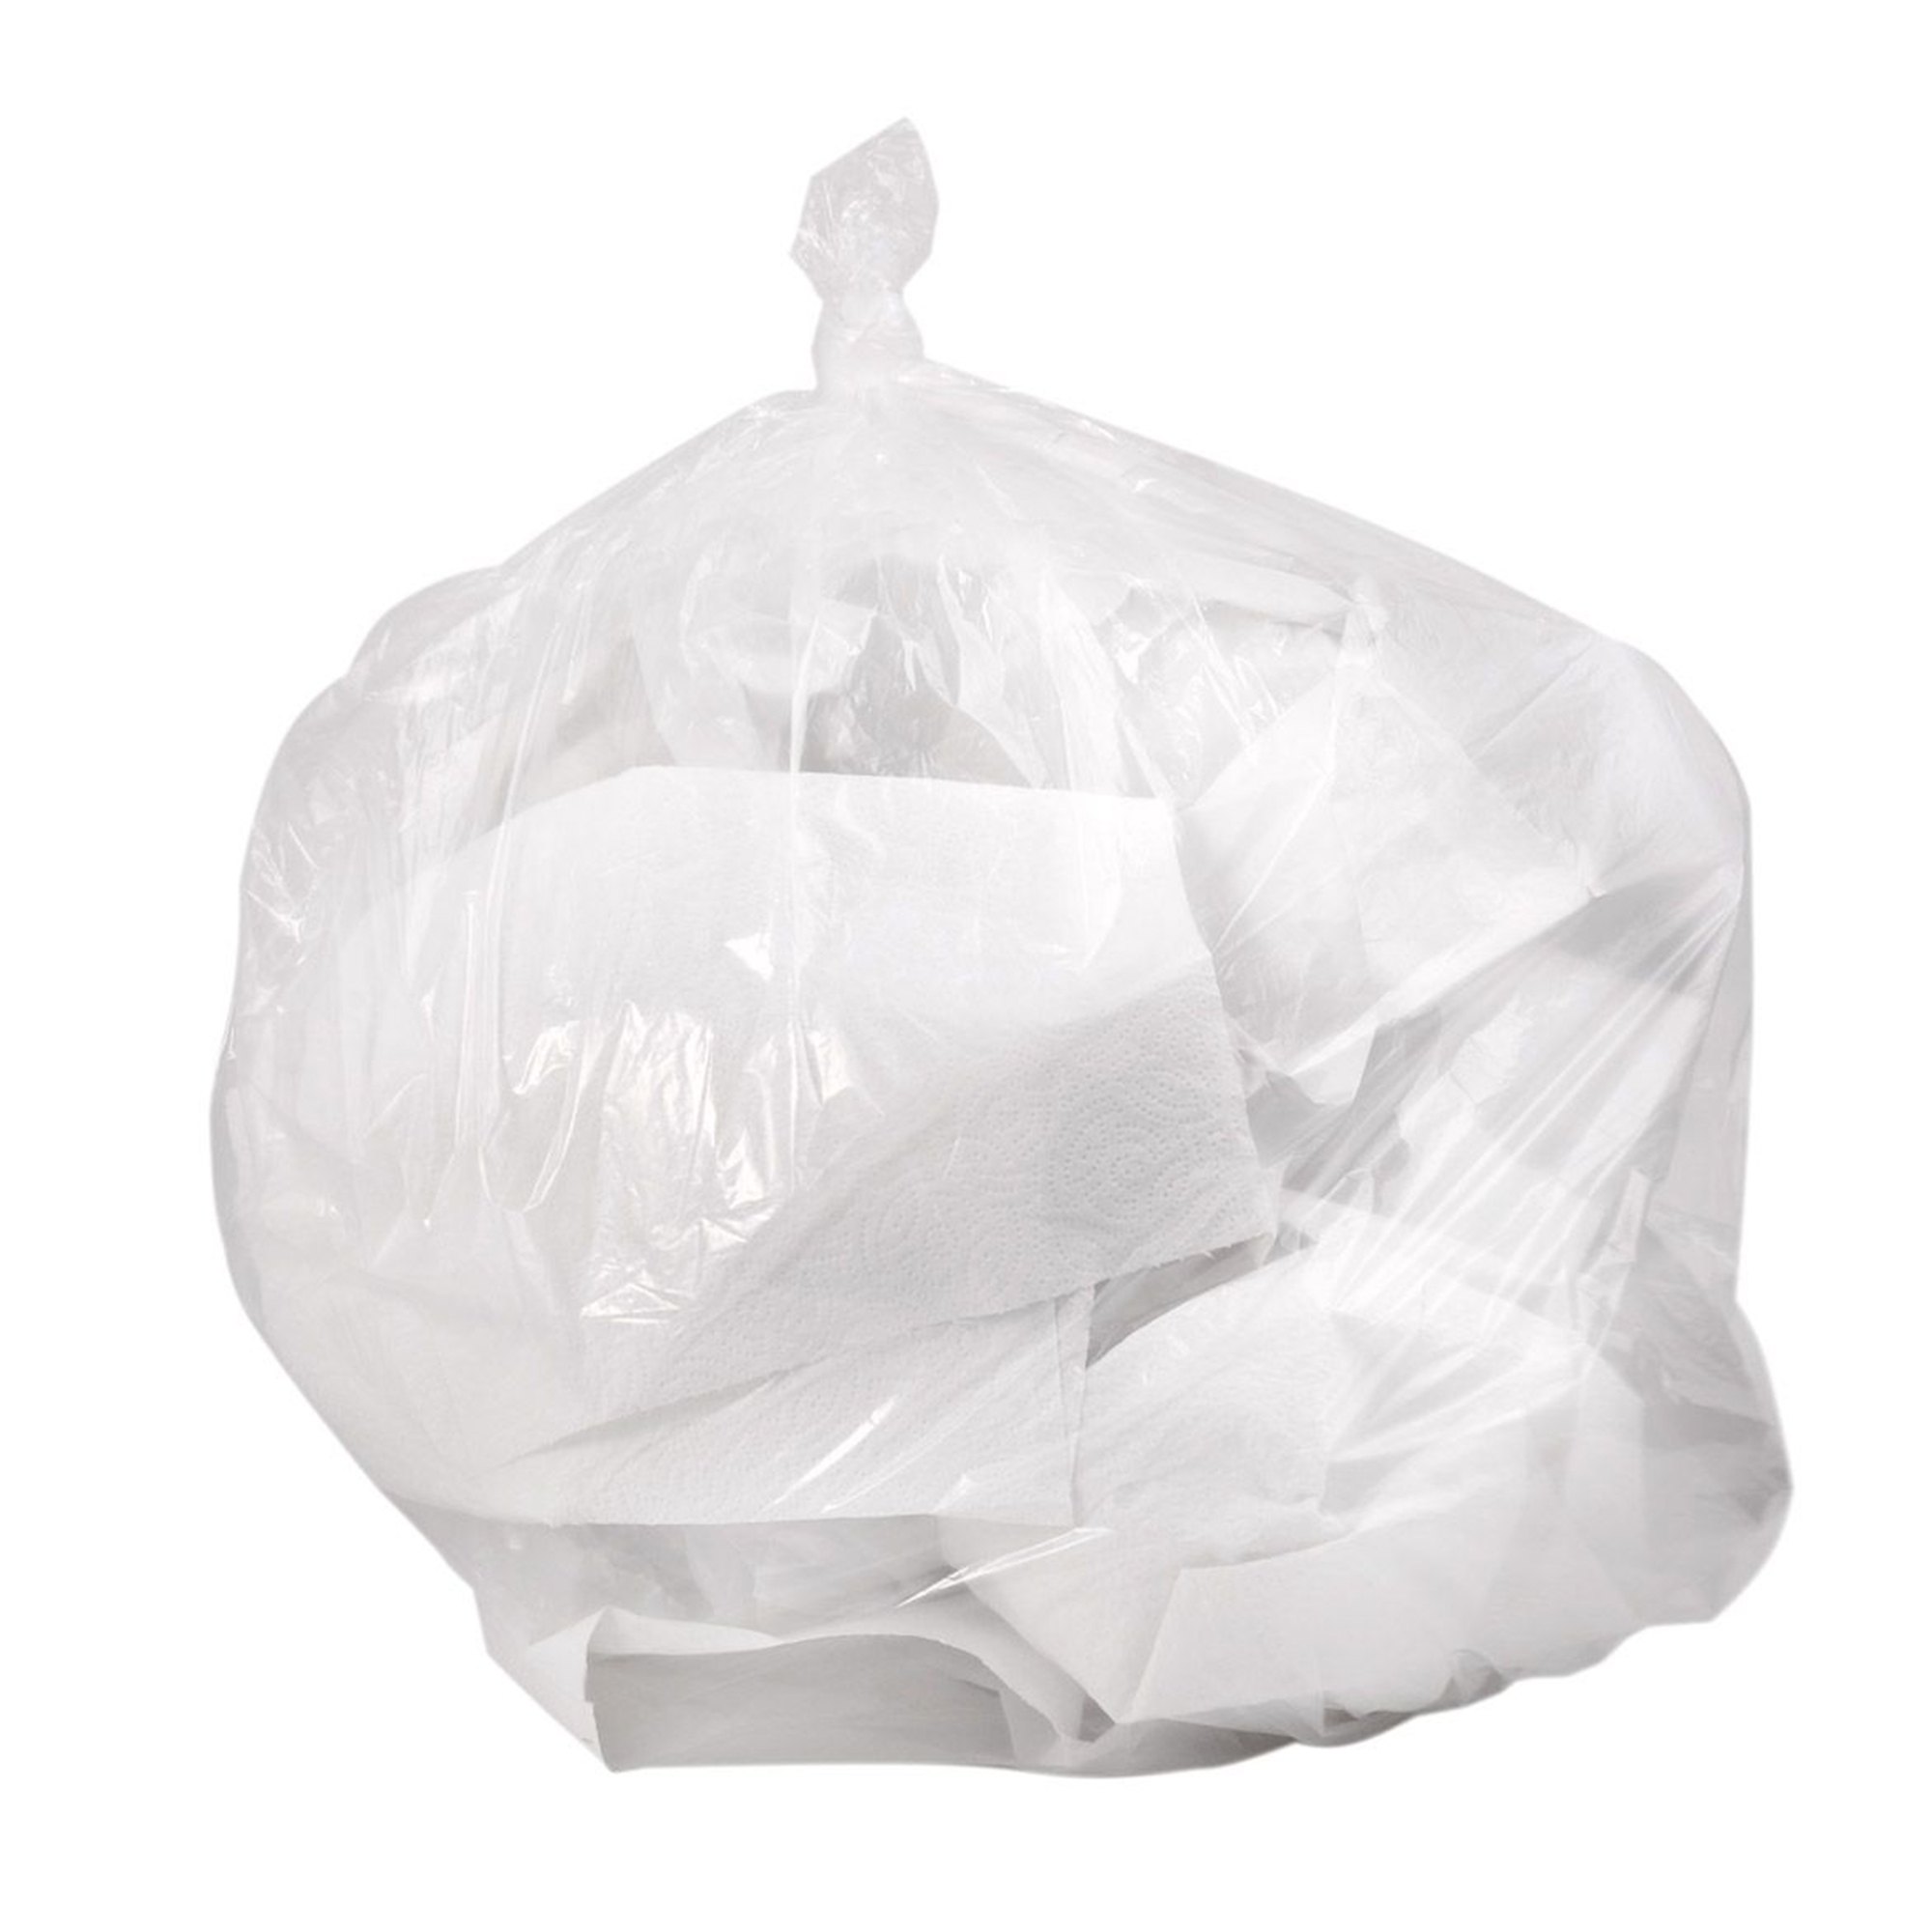 Trash Bags Garbage Bag Large Odorless Singleuse Leakproof Punctureproof  School Park Neighborhood Rubbish 230629 From Youngstore10, $19.16